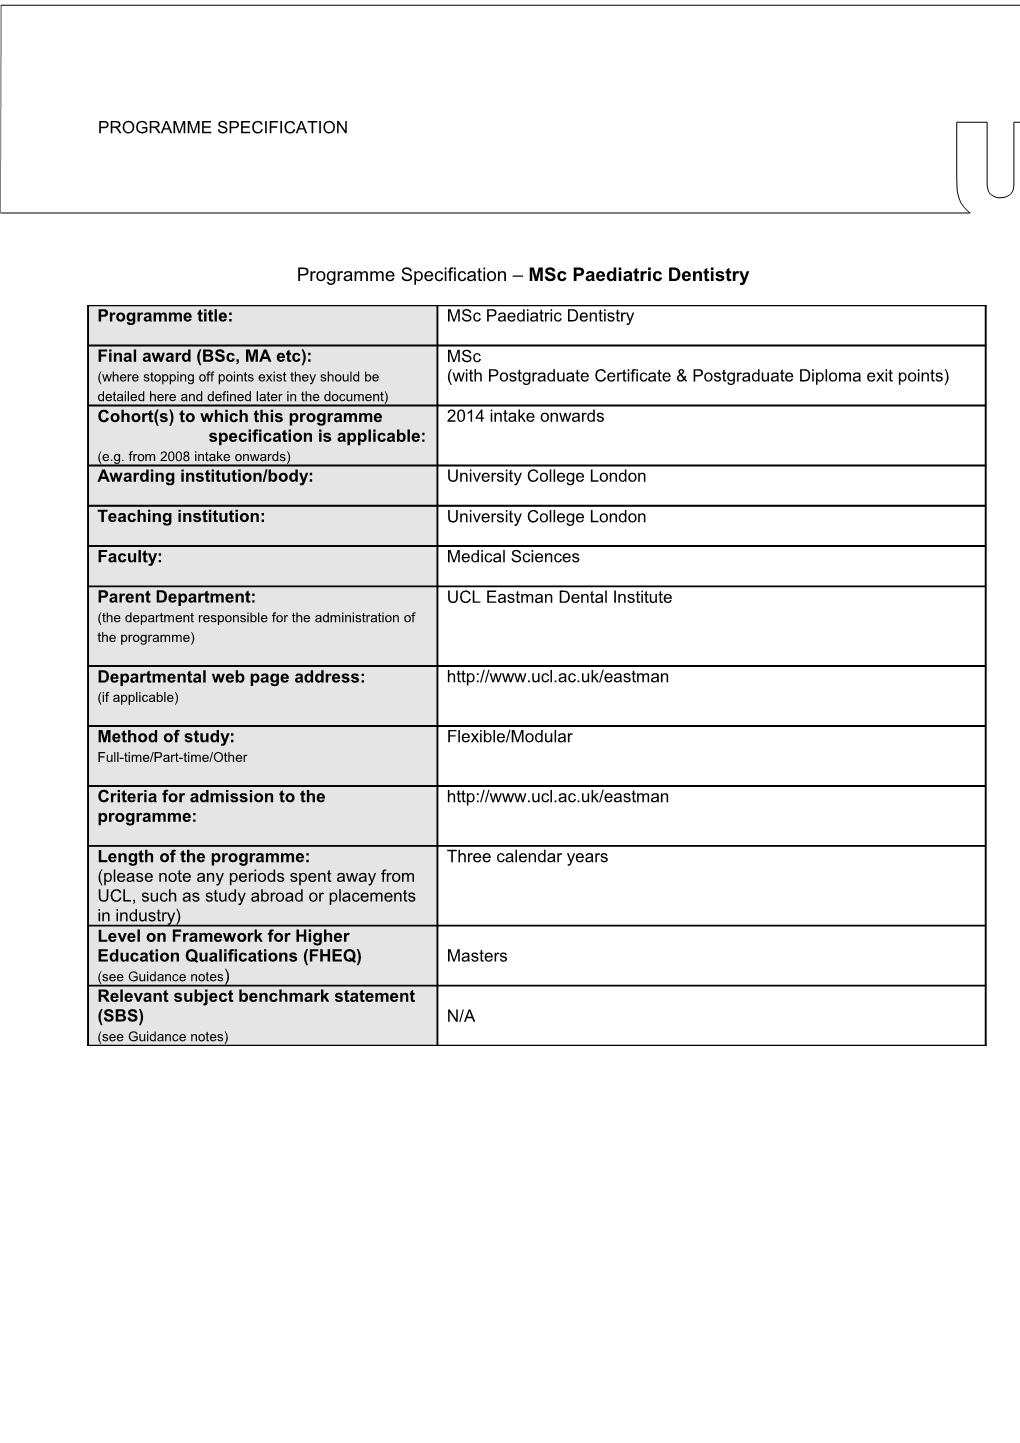 Programme Specification Msc Paediatric Dentistry